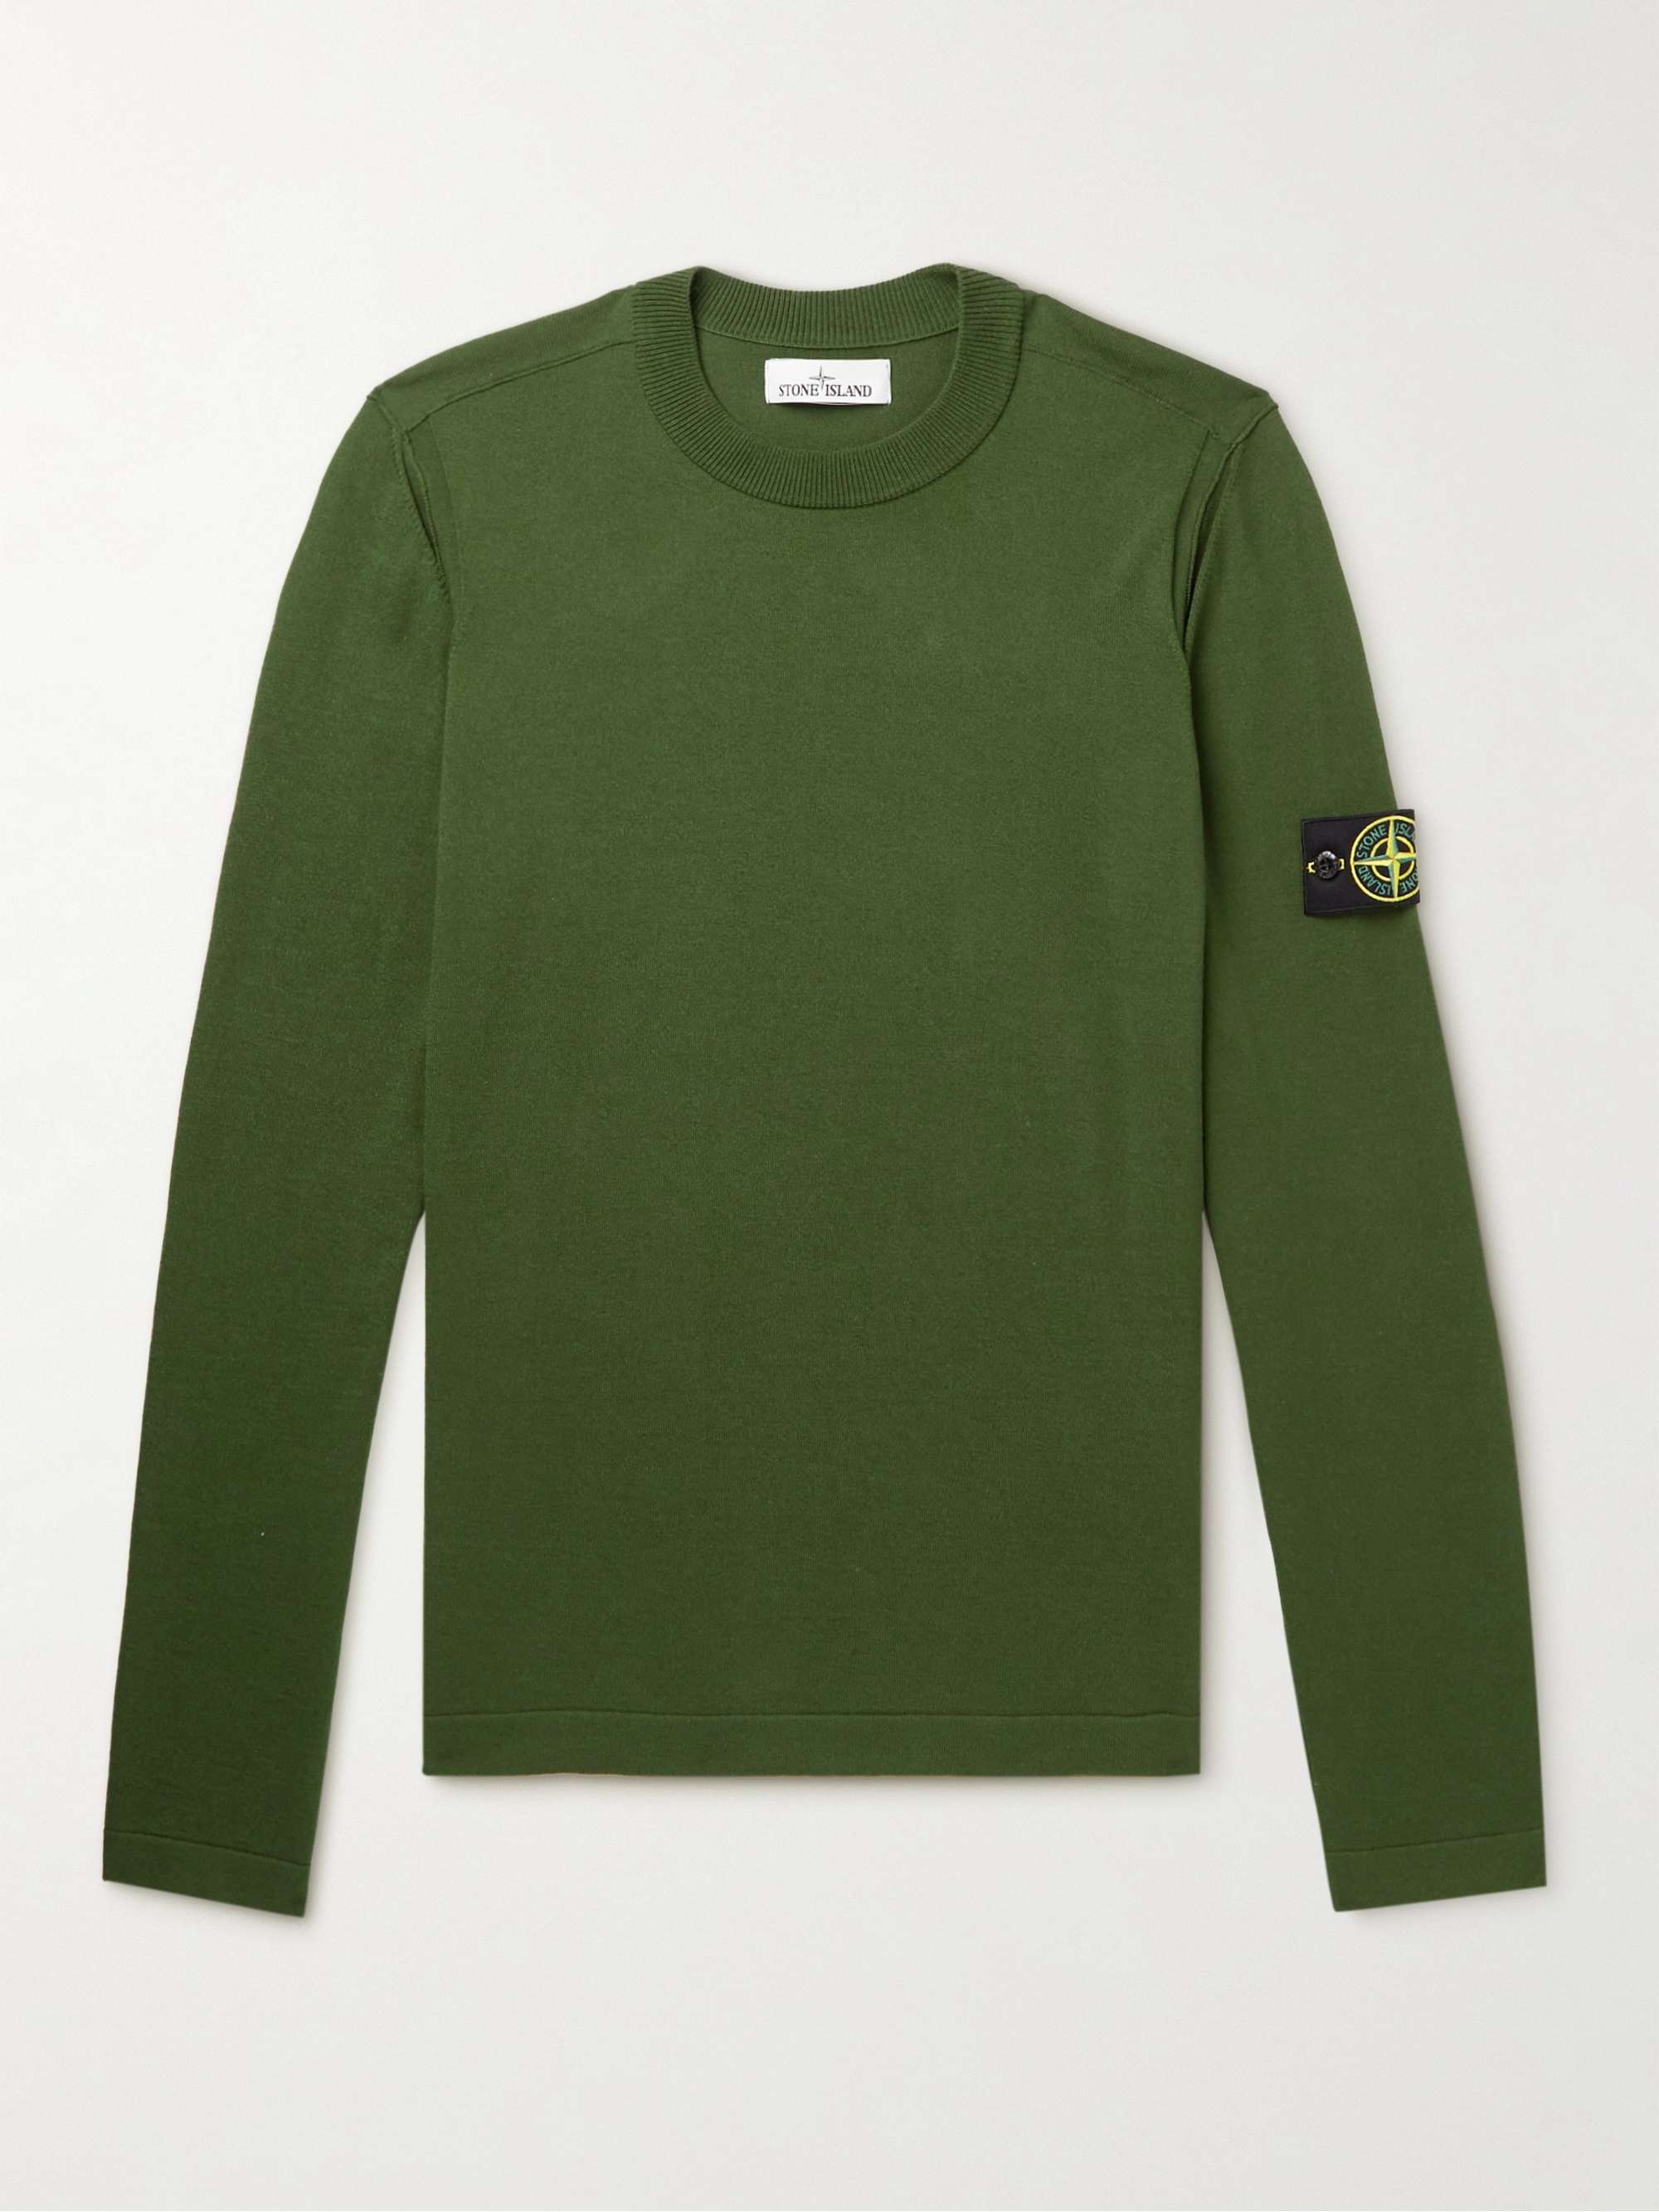 STONE ISLAND Logo-Appliquéd Cotton-Blend Sweater